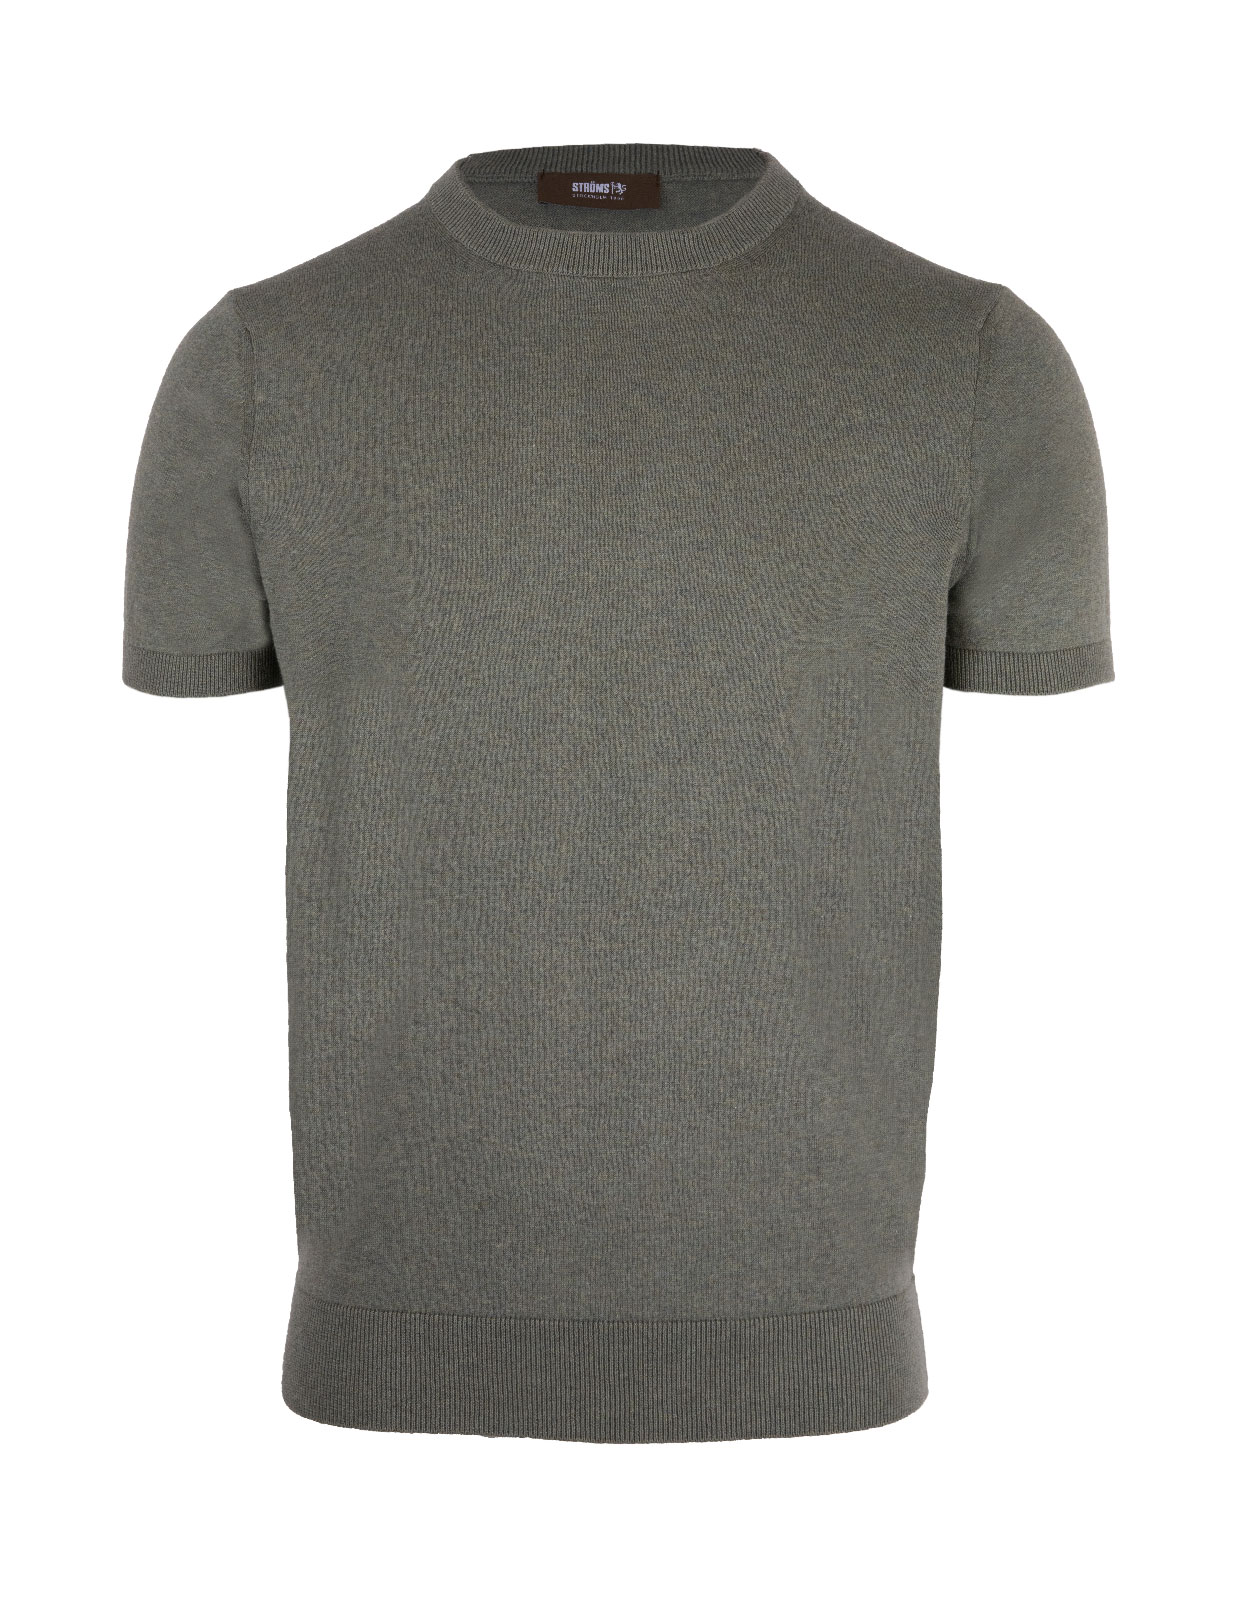 T-Shirt Knitted Cotton Verde Bosco Stl XL